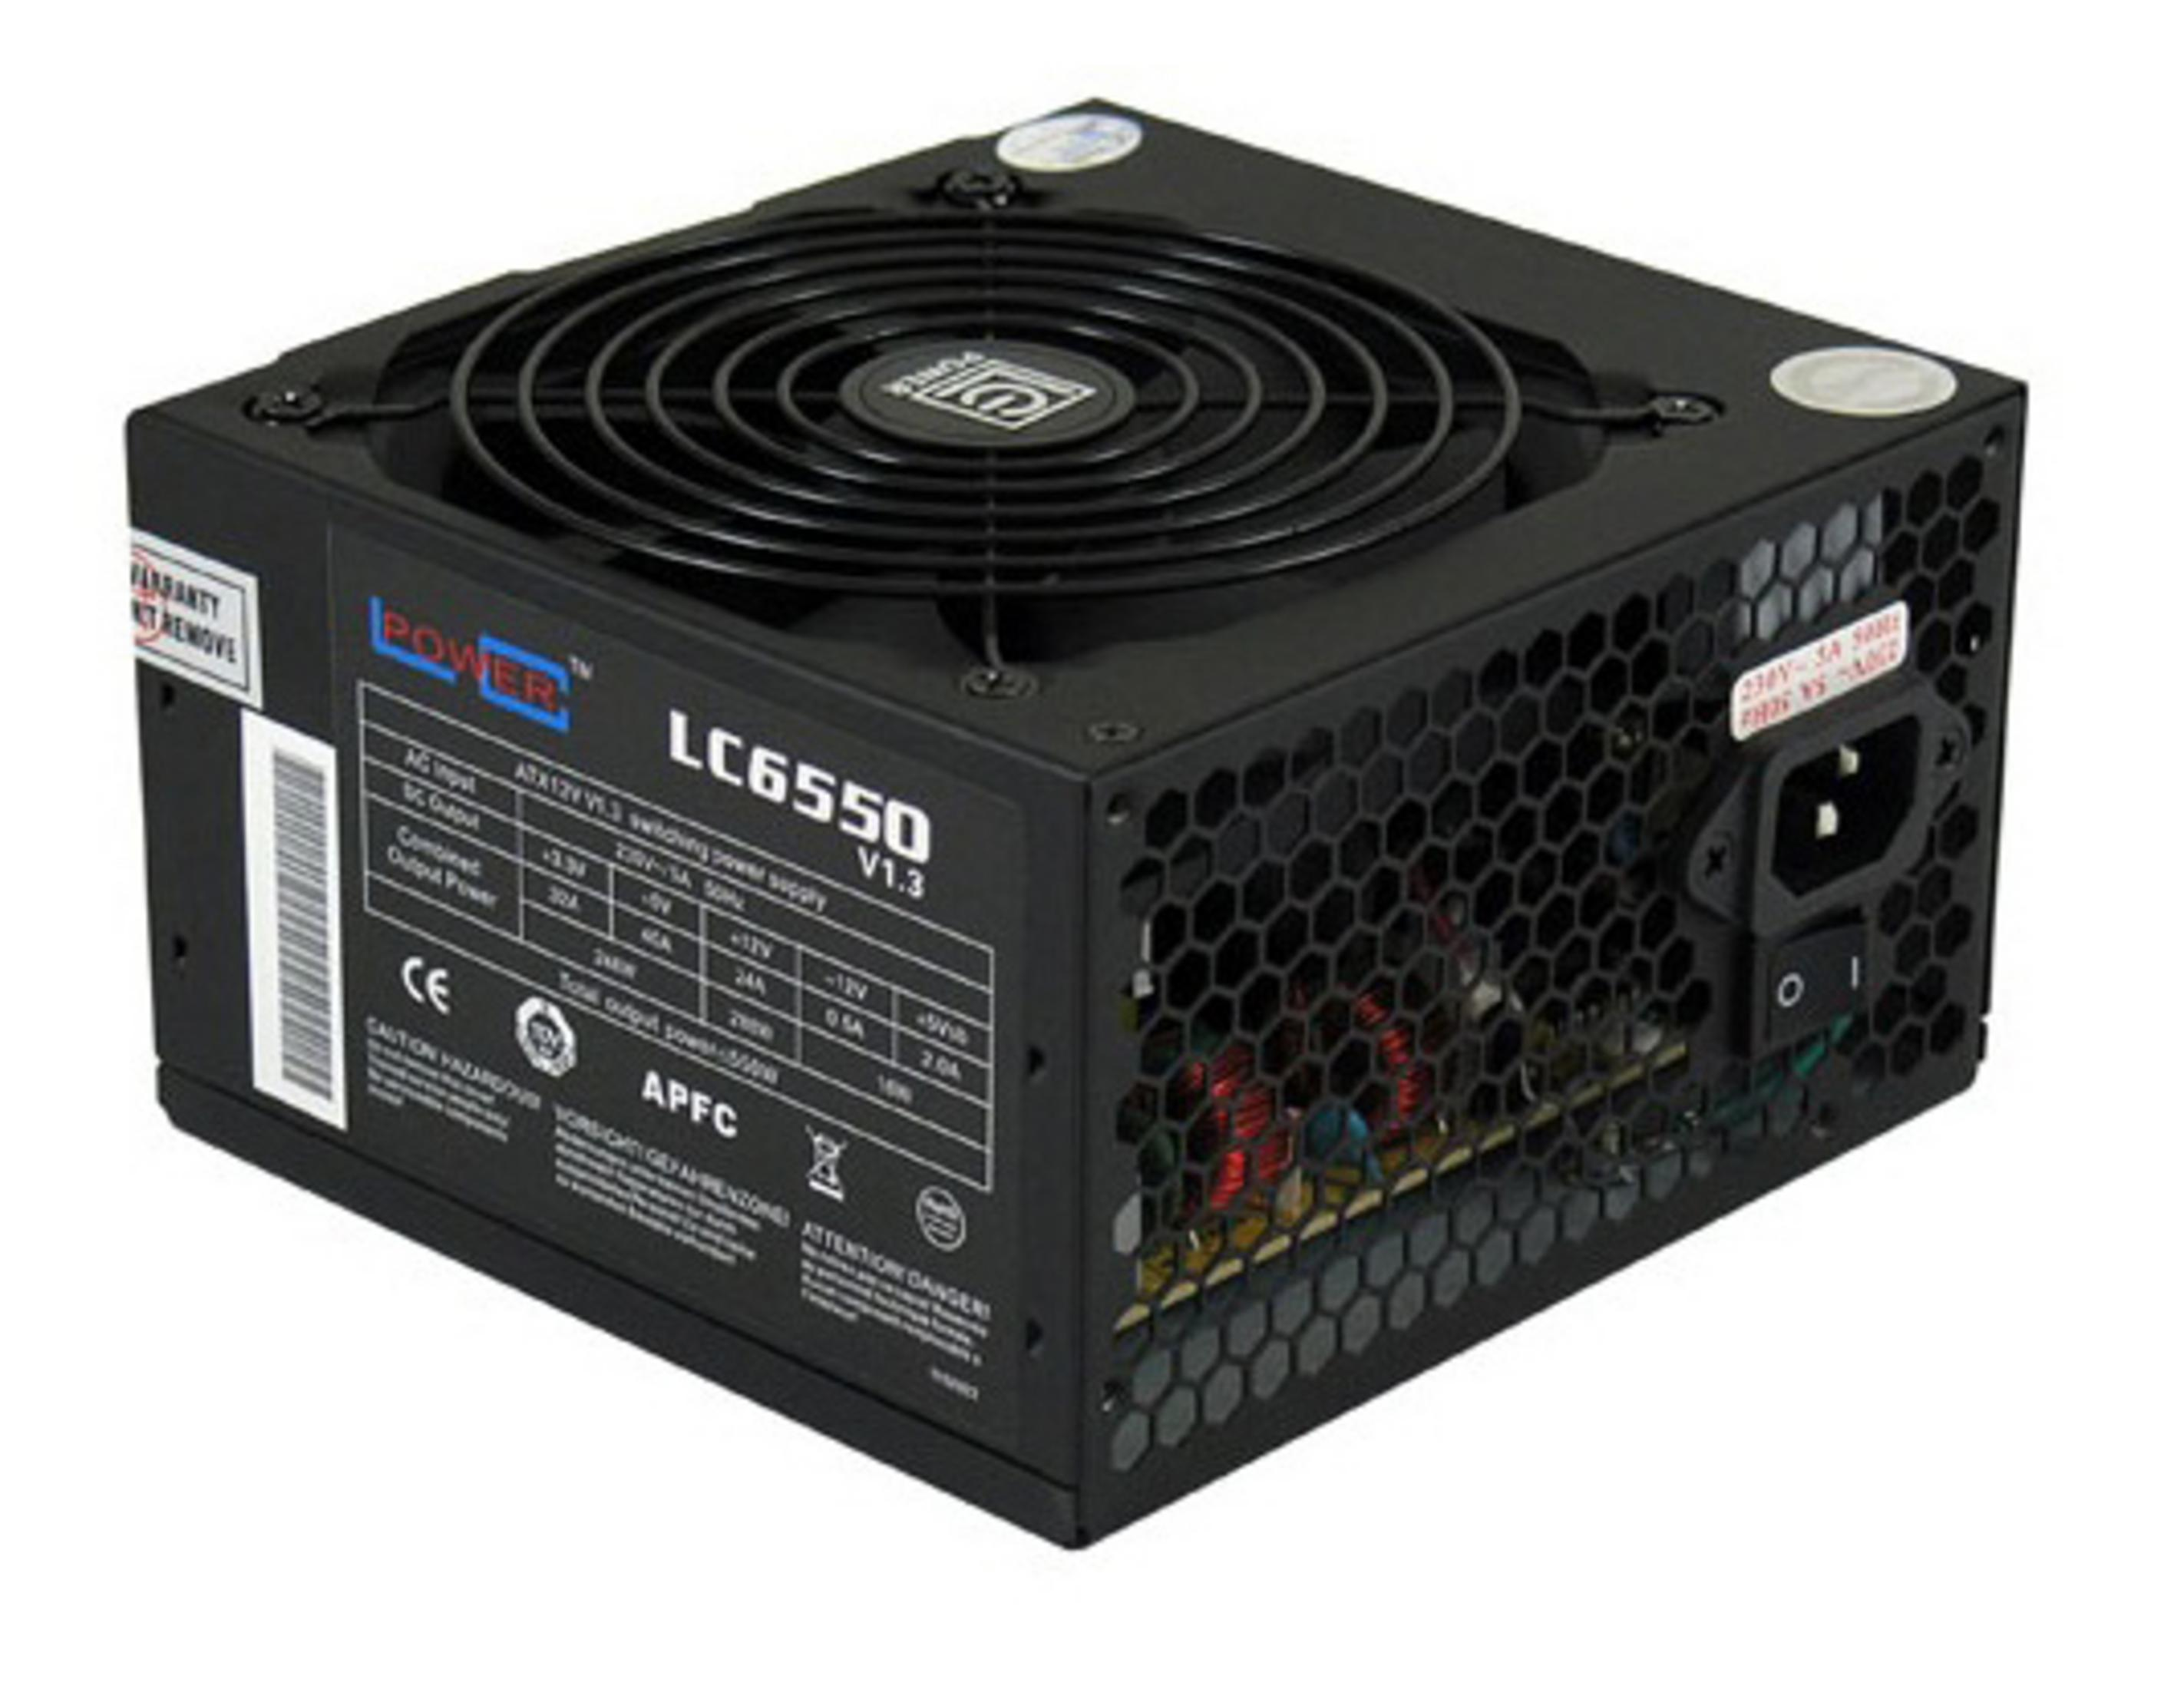 Strom LC-Power 550W, V2.3, Super-Silent-Serie, Netzteile LC6550 ATX-Netzteil Watt LC 550 80+ POWER